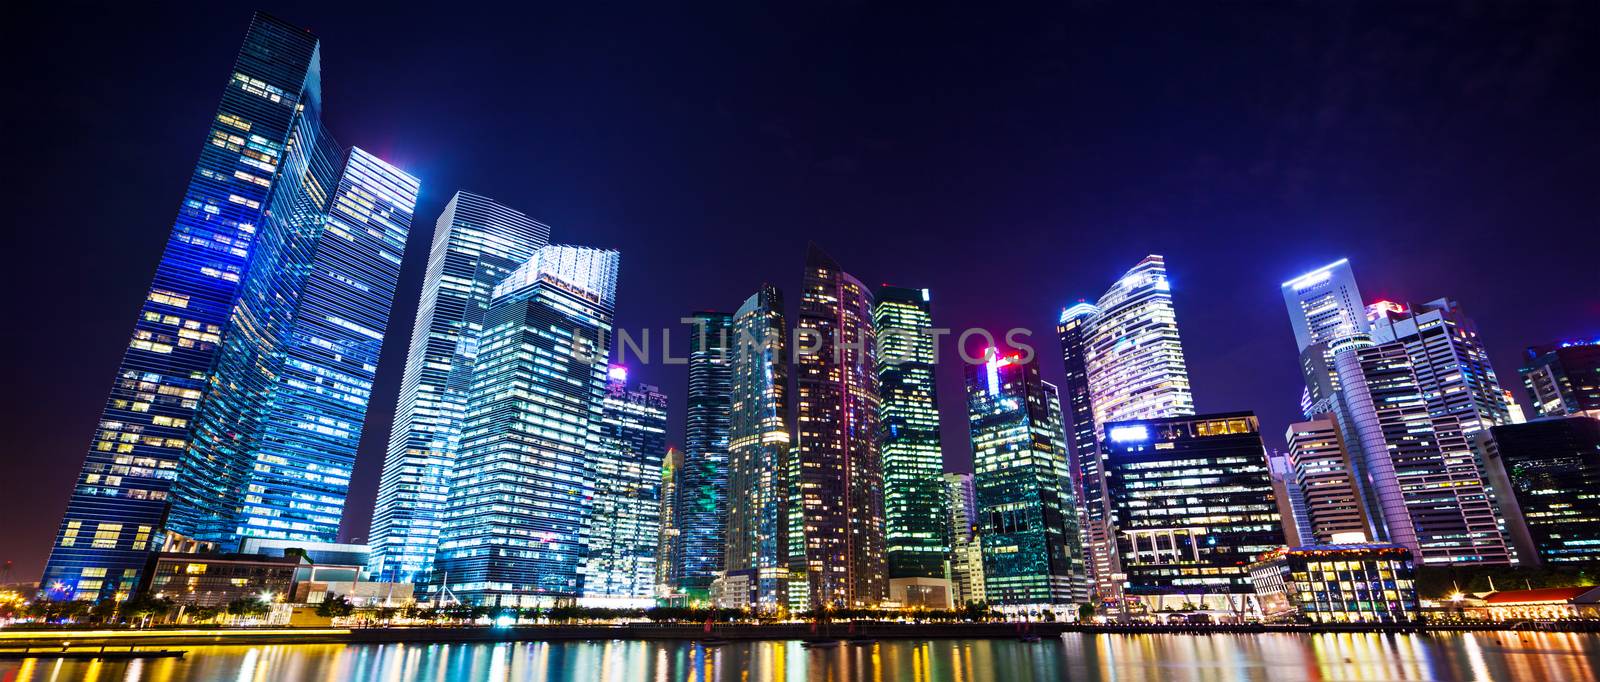 Cityscape Singapore at night